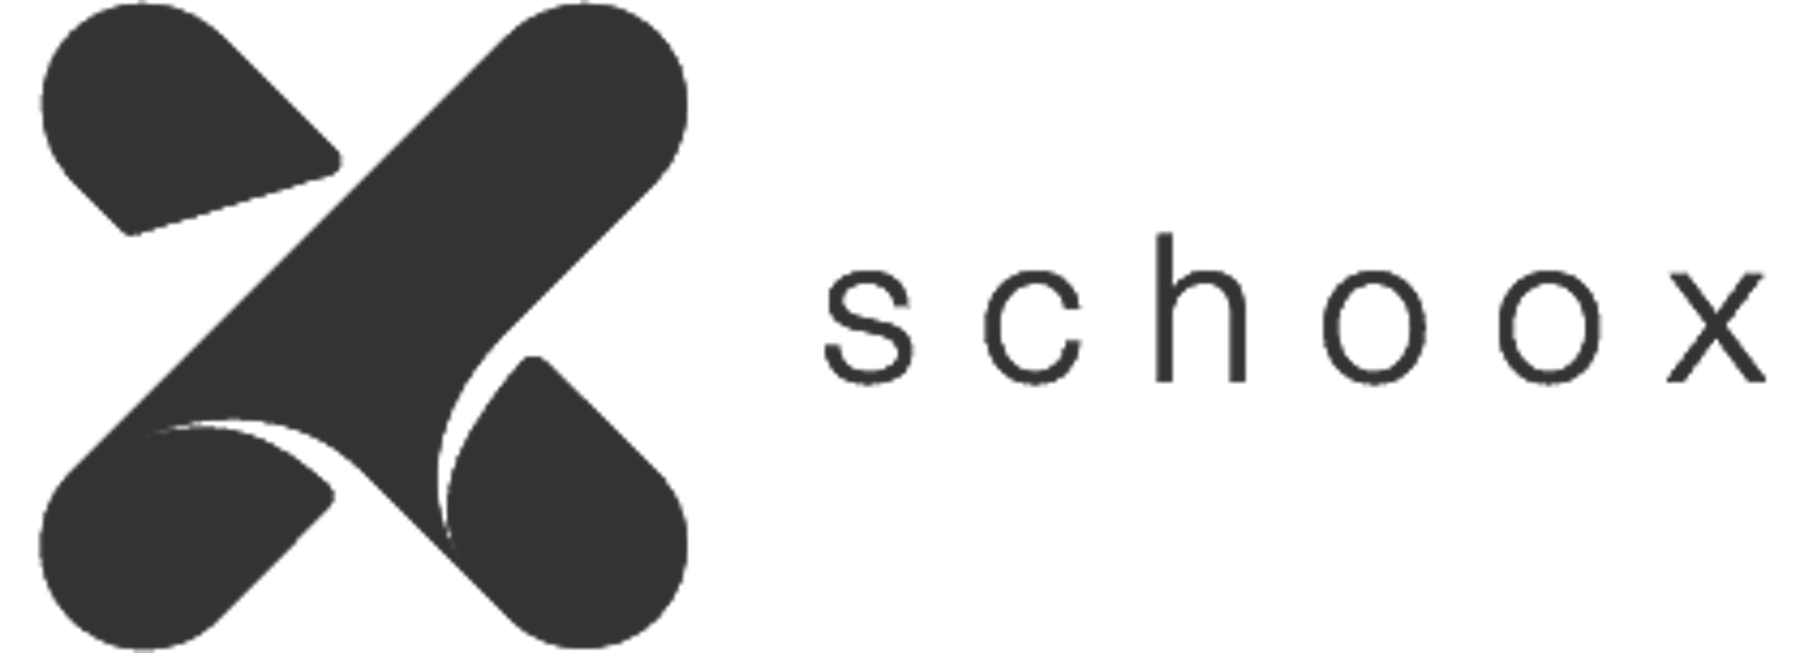 Schoox logo black png